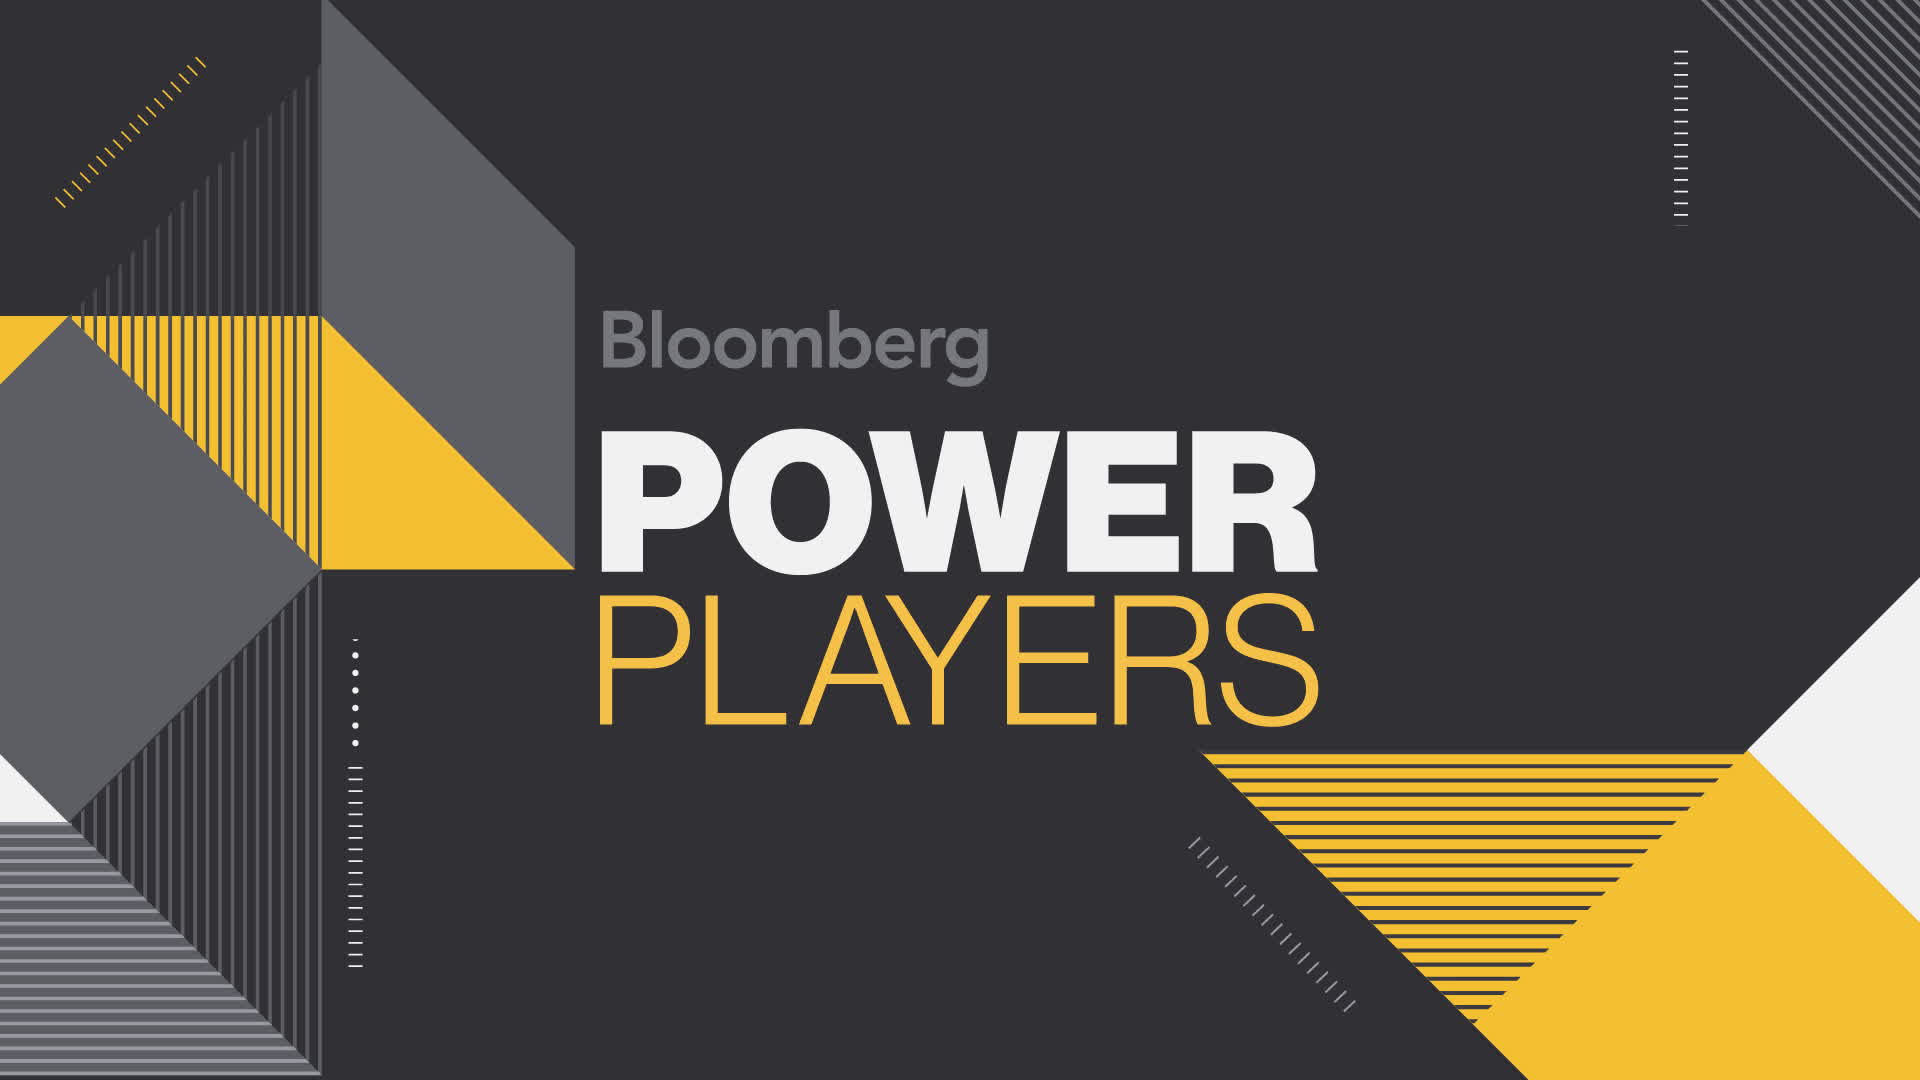 Bloomberg Power Players - Bloomberg